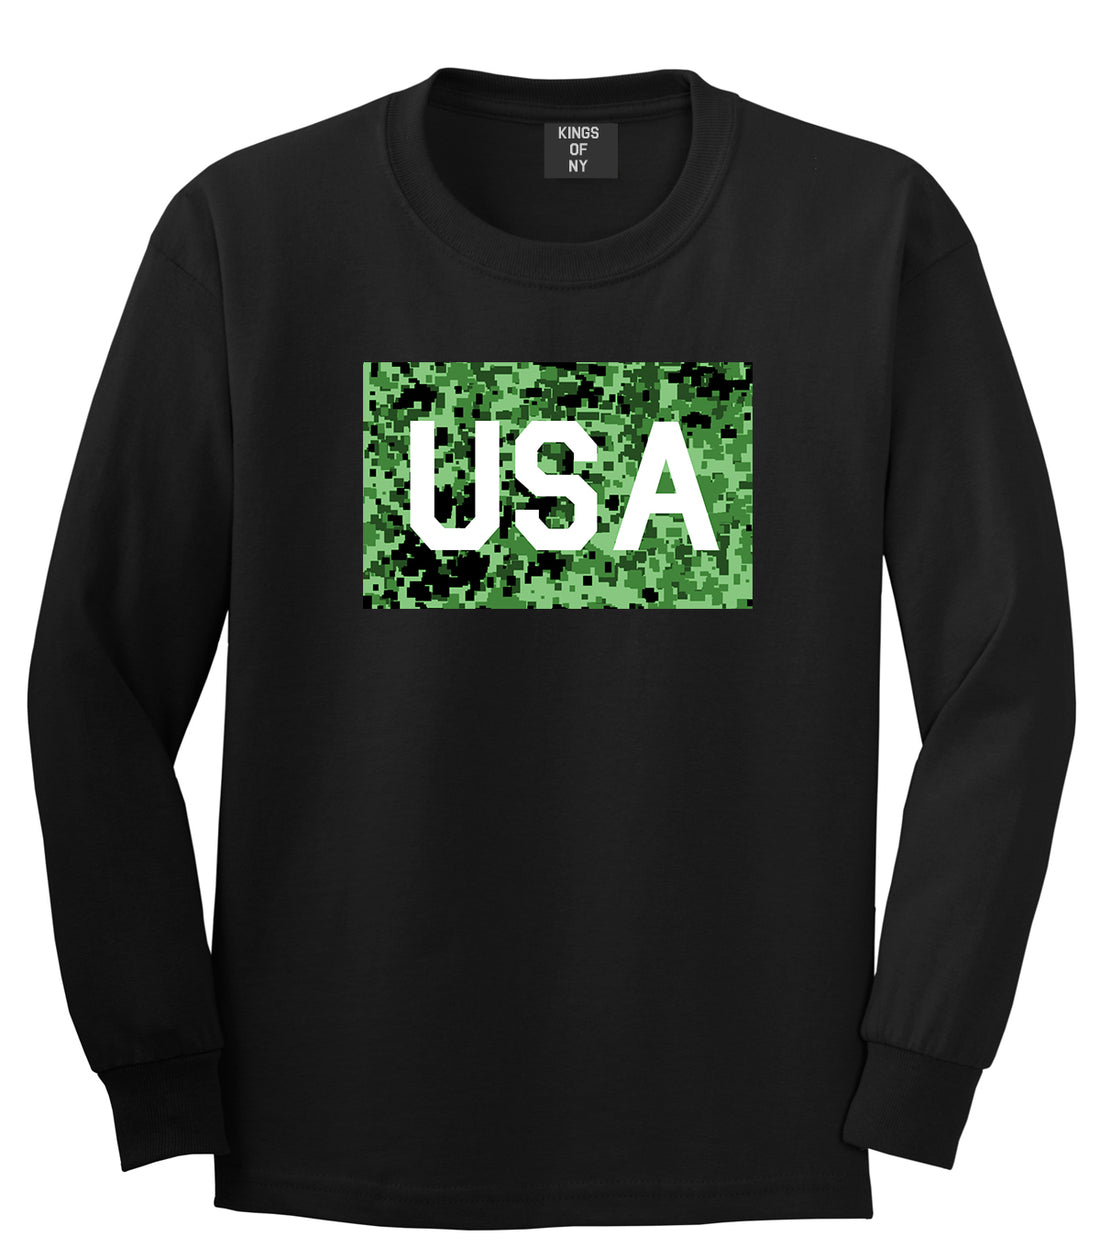 USA Digital Camo Army Mens Black Long Sleeve T-Shirt by Kings Of NY